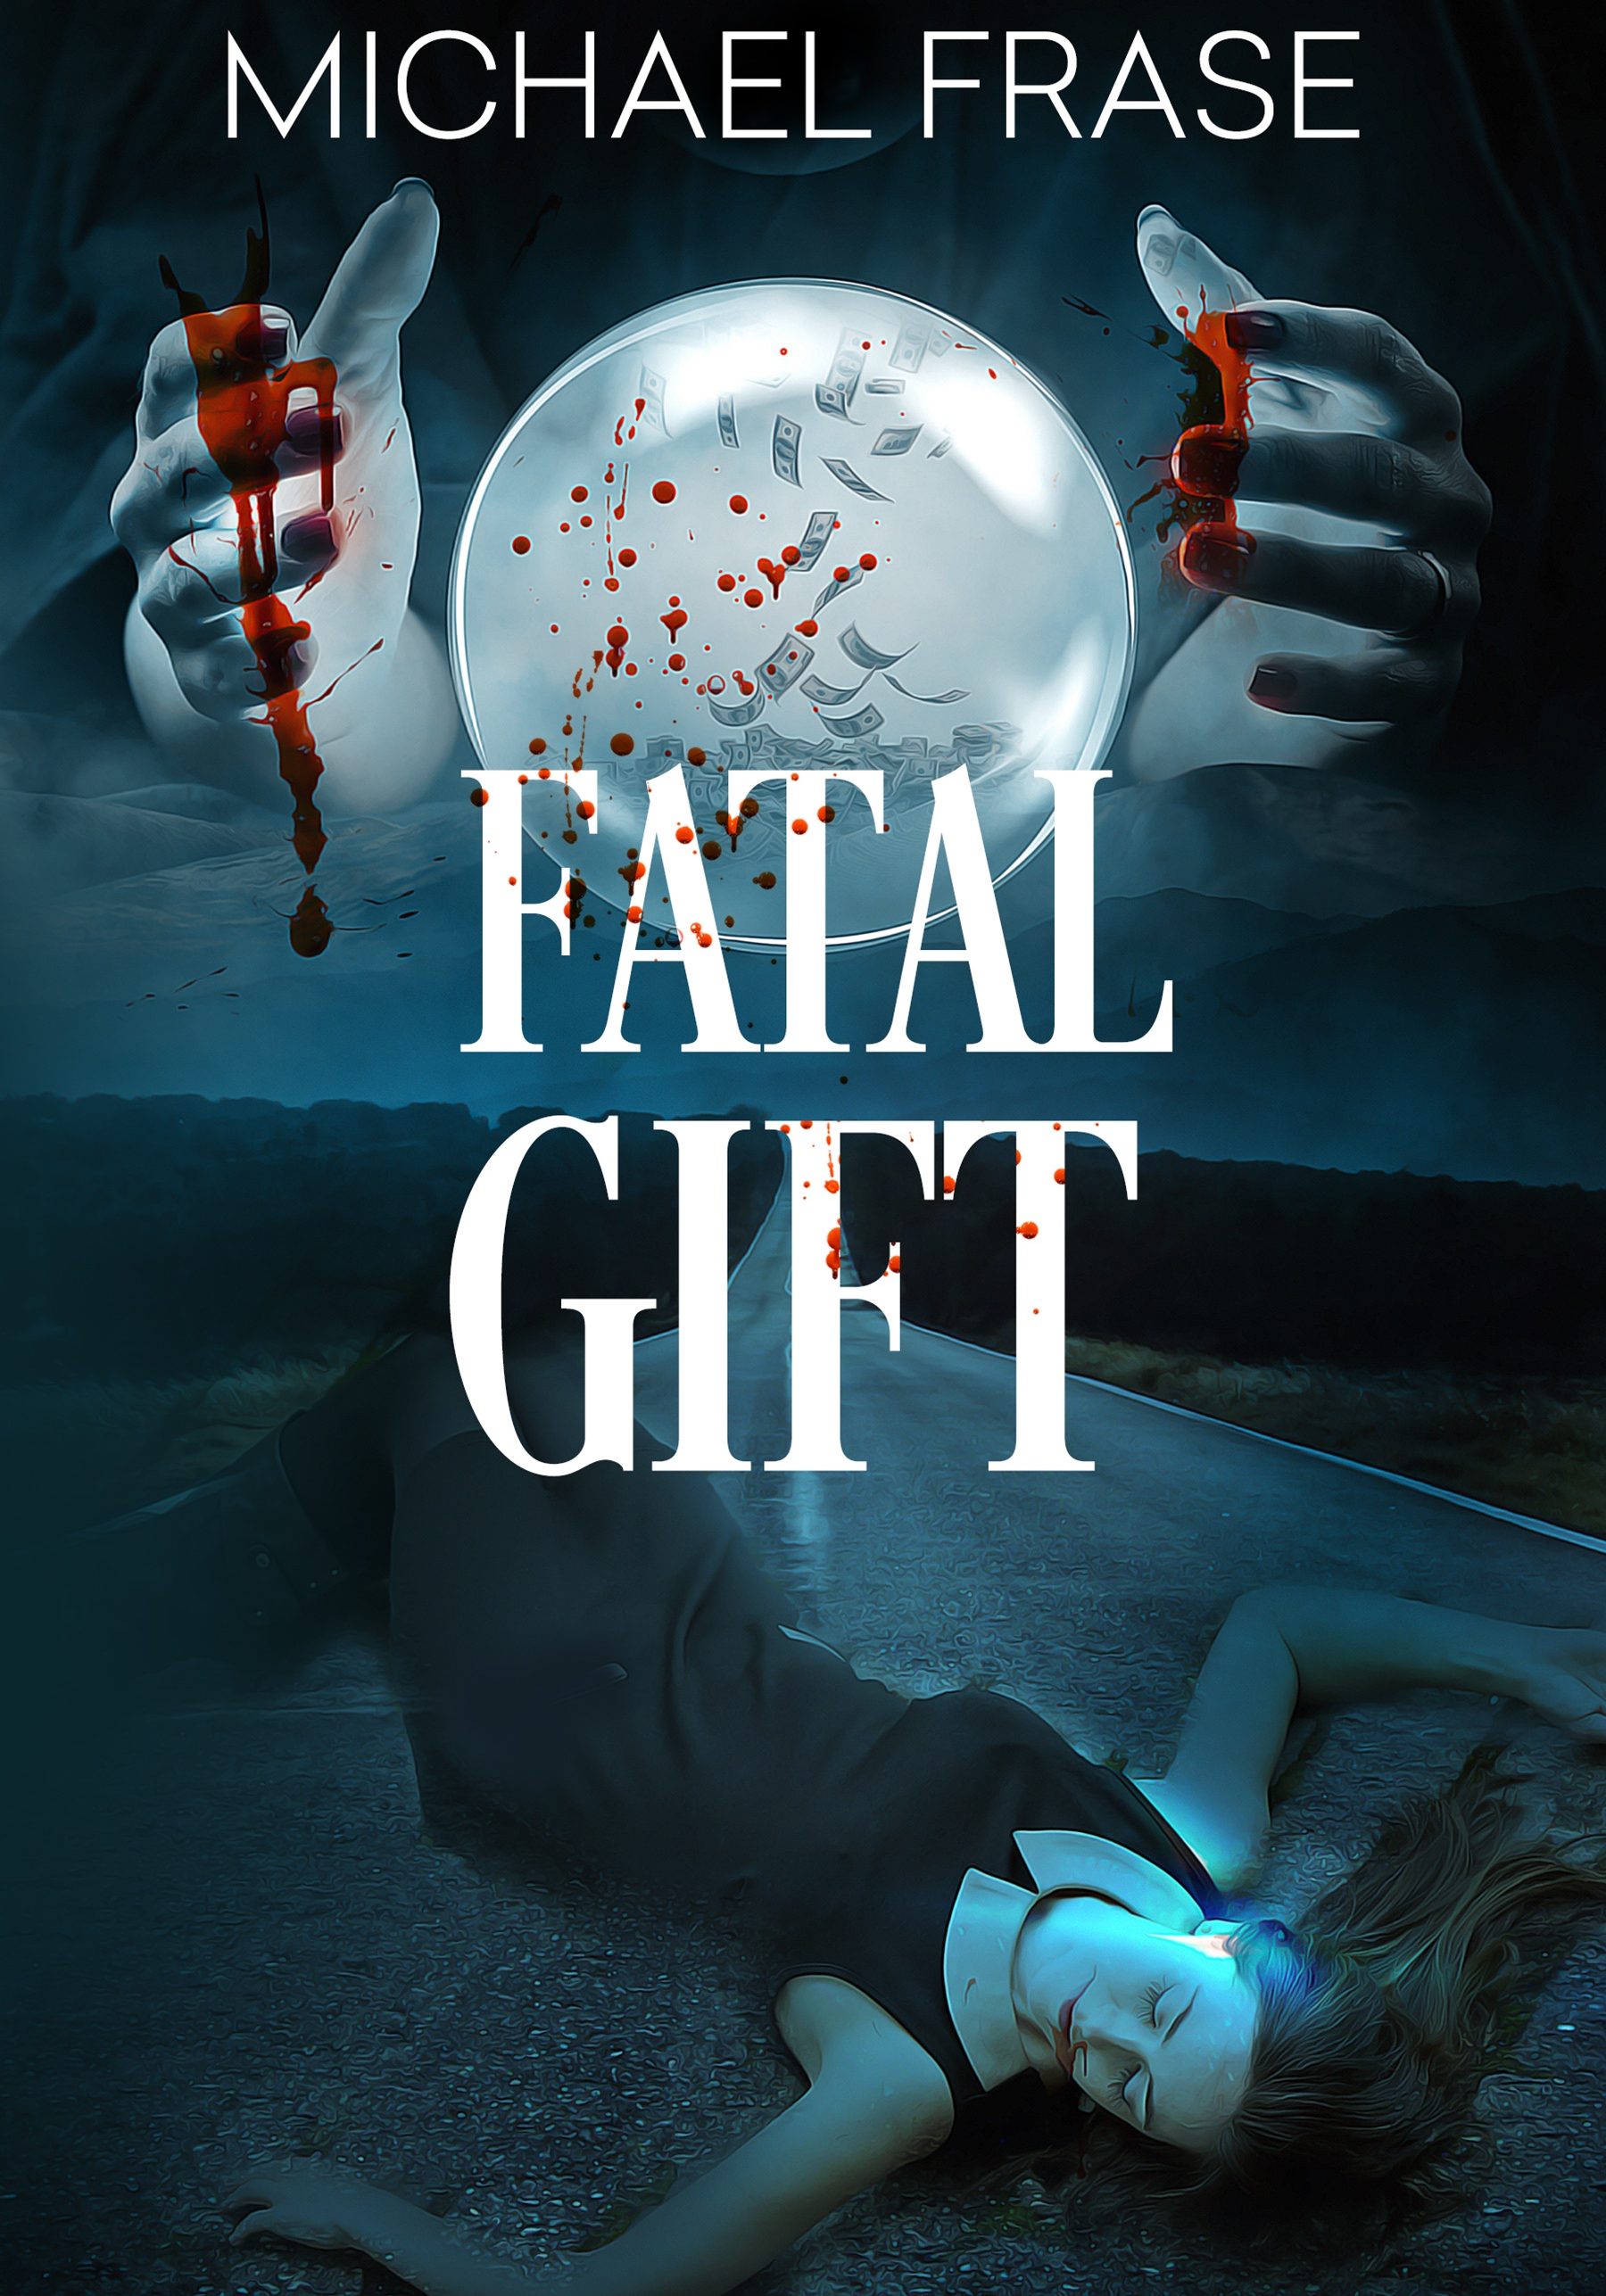 Fatal Gift book trailer loewenherz creative